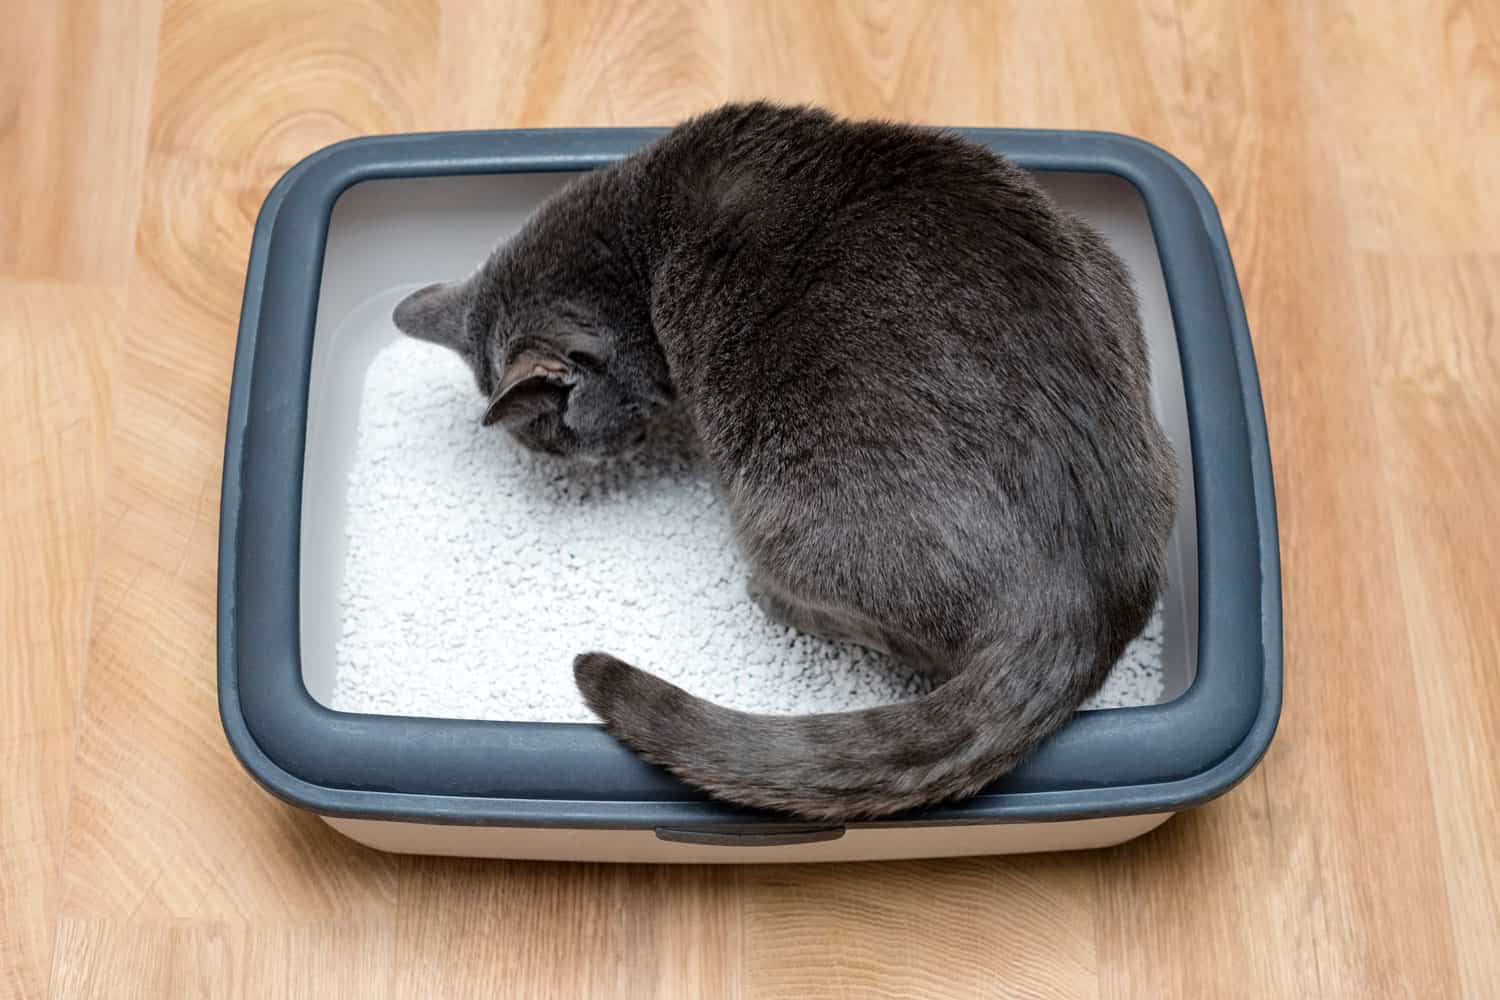 A British shorthair cat preparing to poop in his cat litter